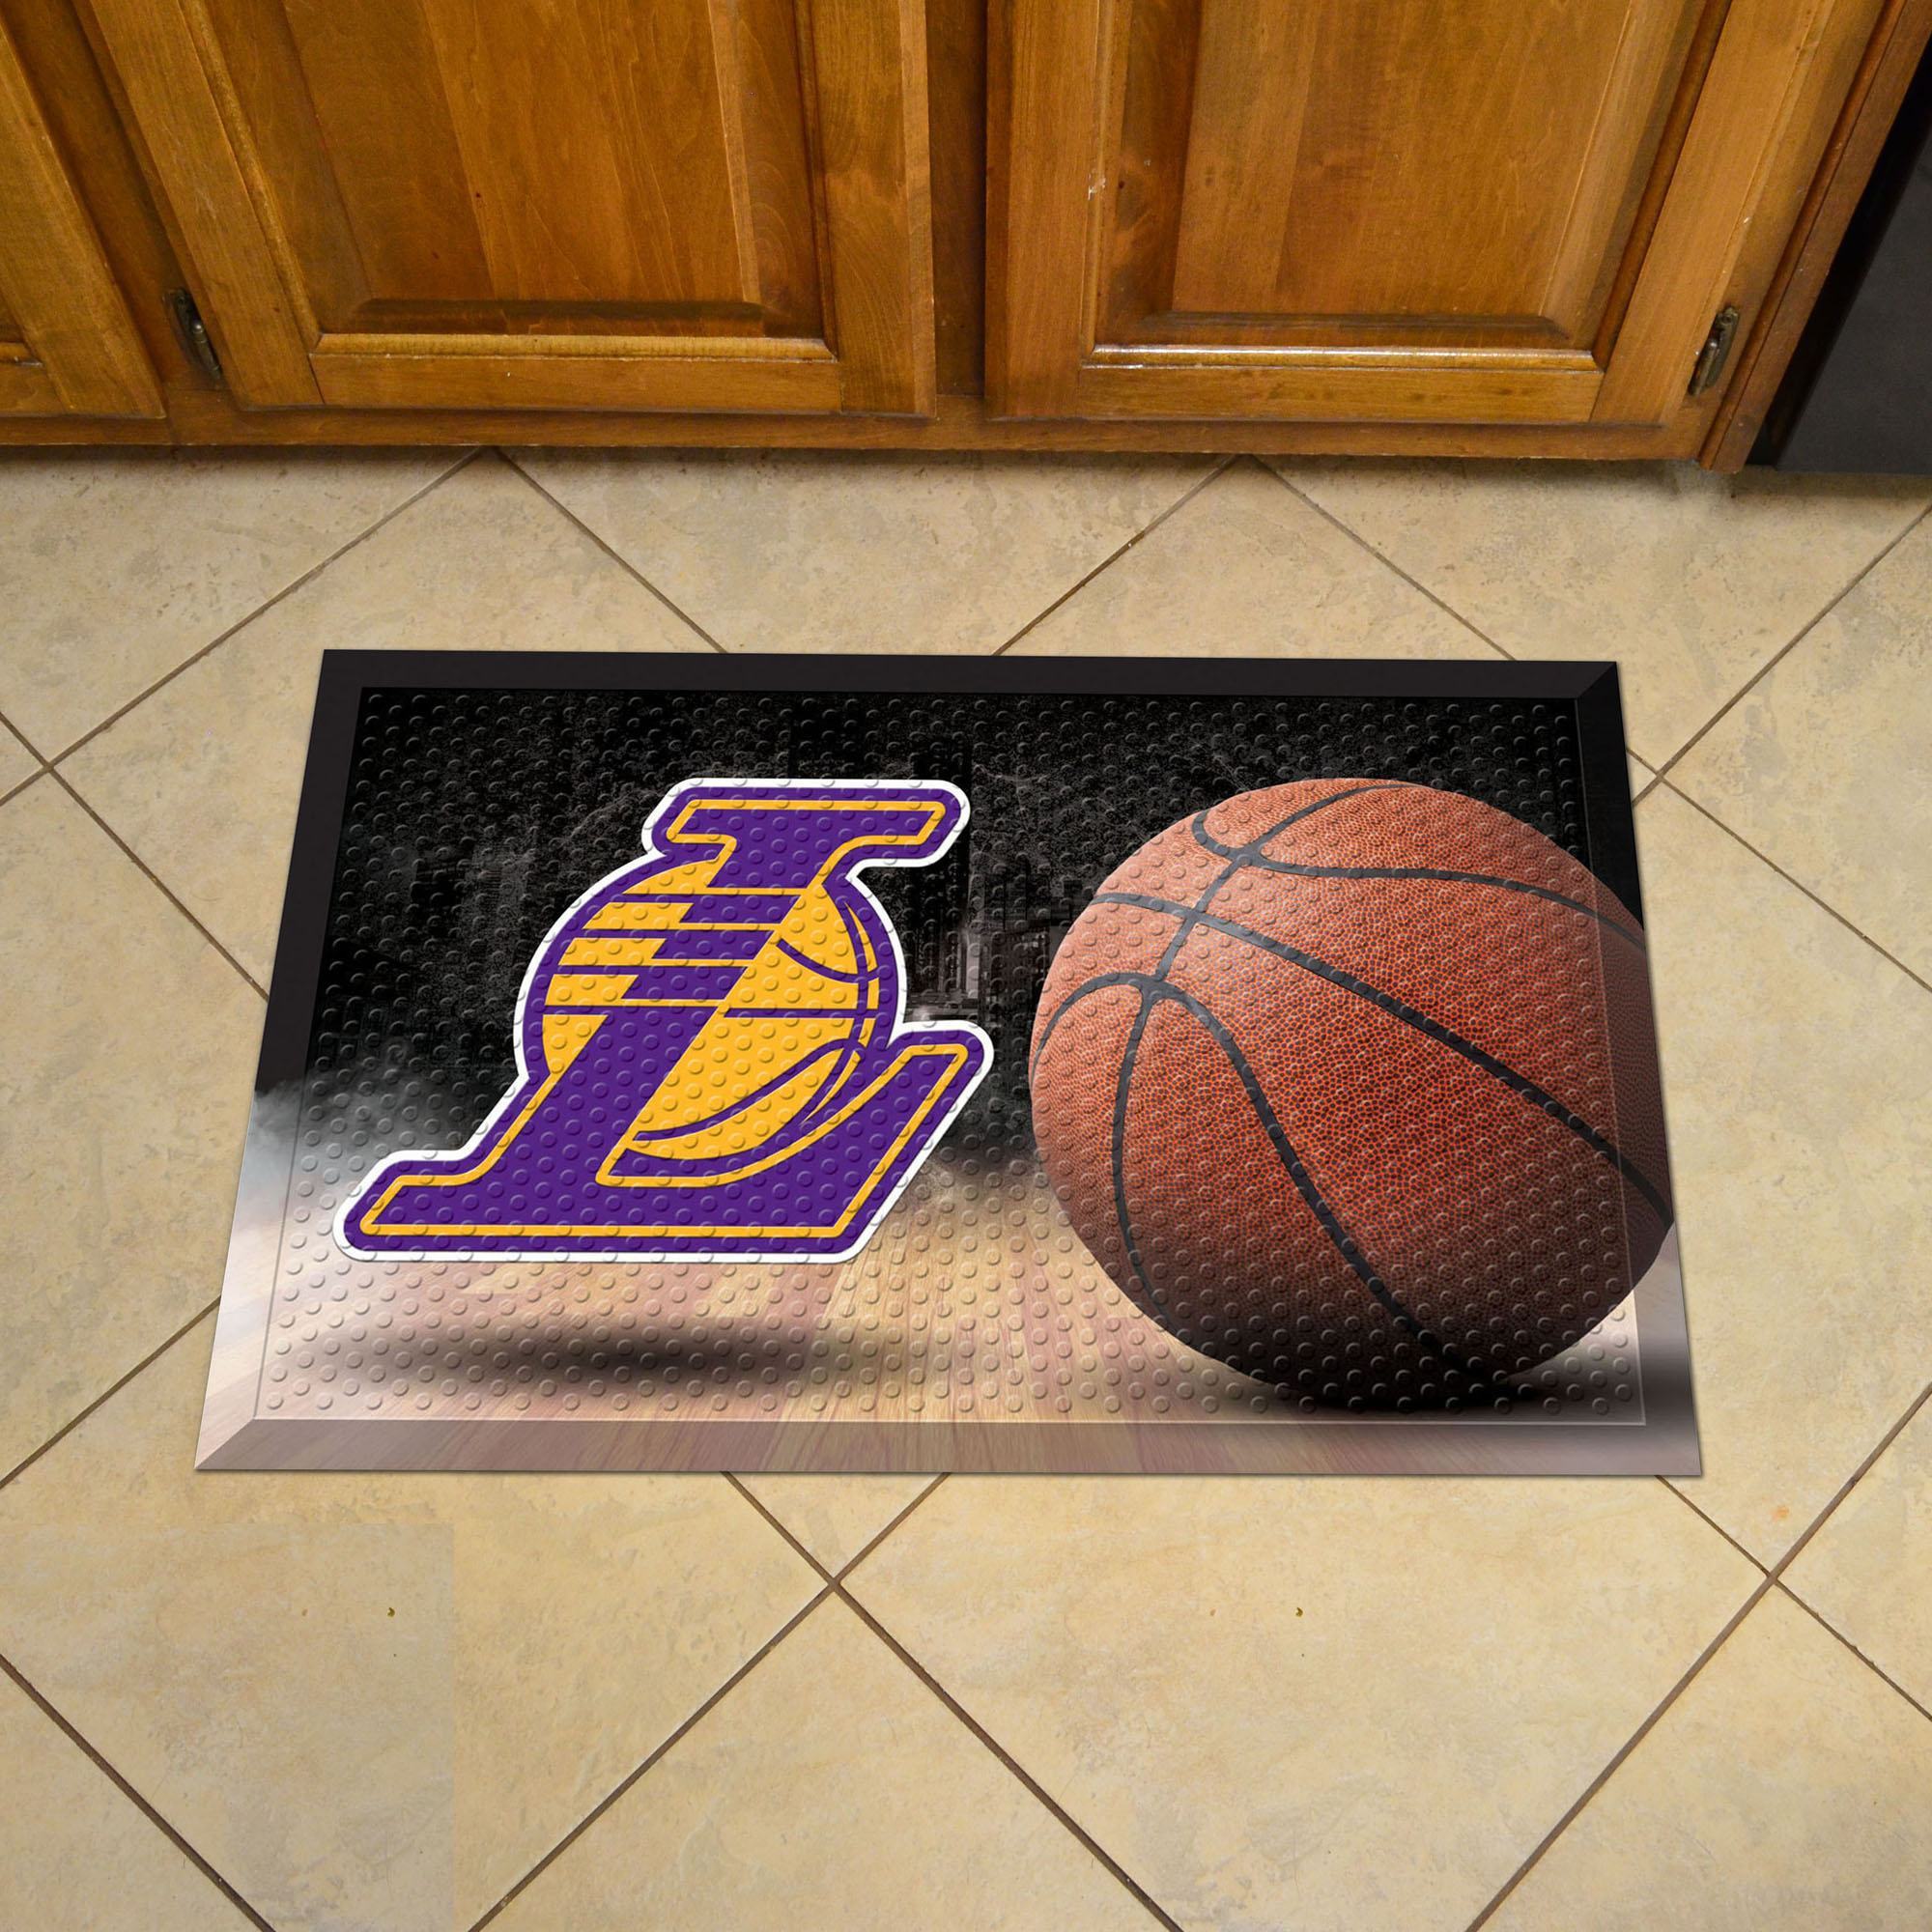 Los Angeles Lakers Scrapper Doormat - 19 x 30 rubber